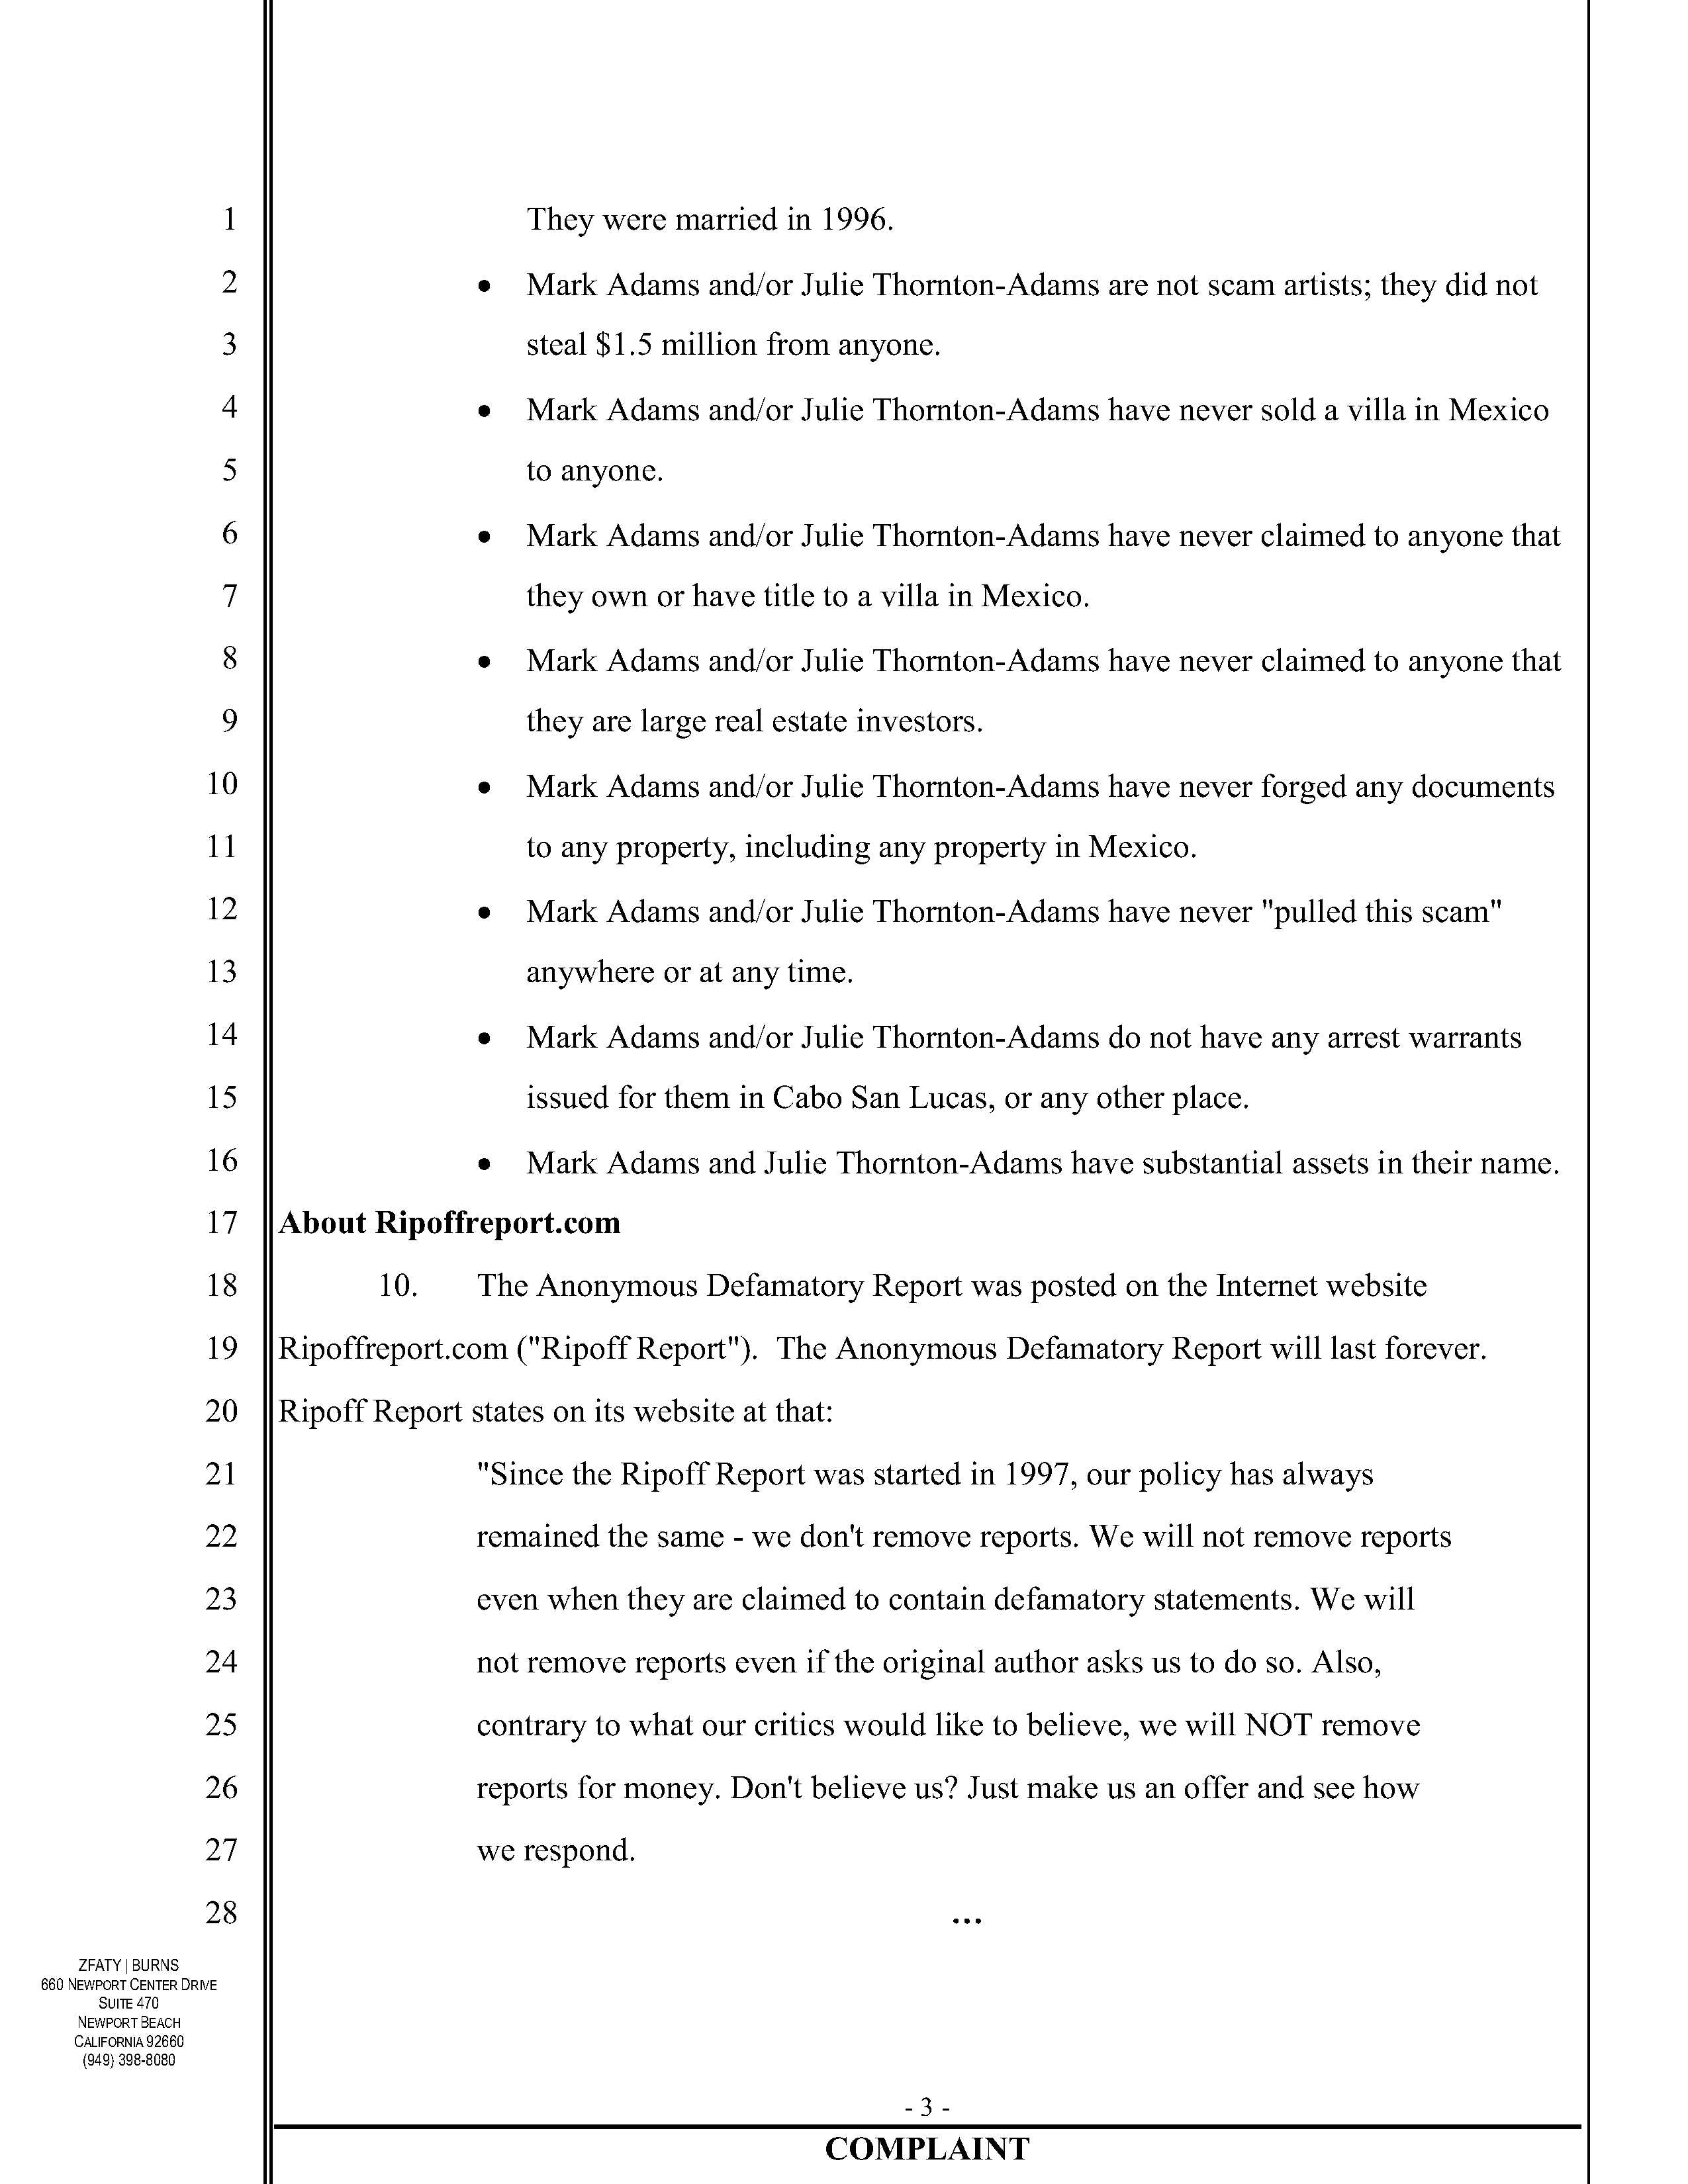 Court Conformed Copy of Complaint, page 4